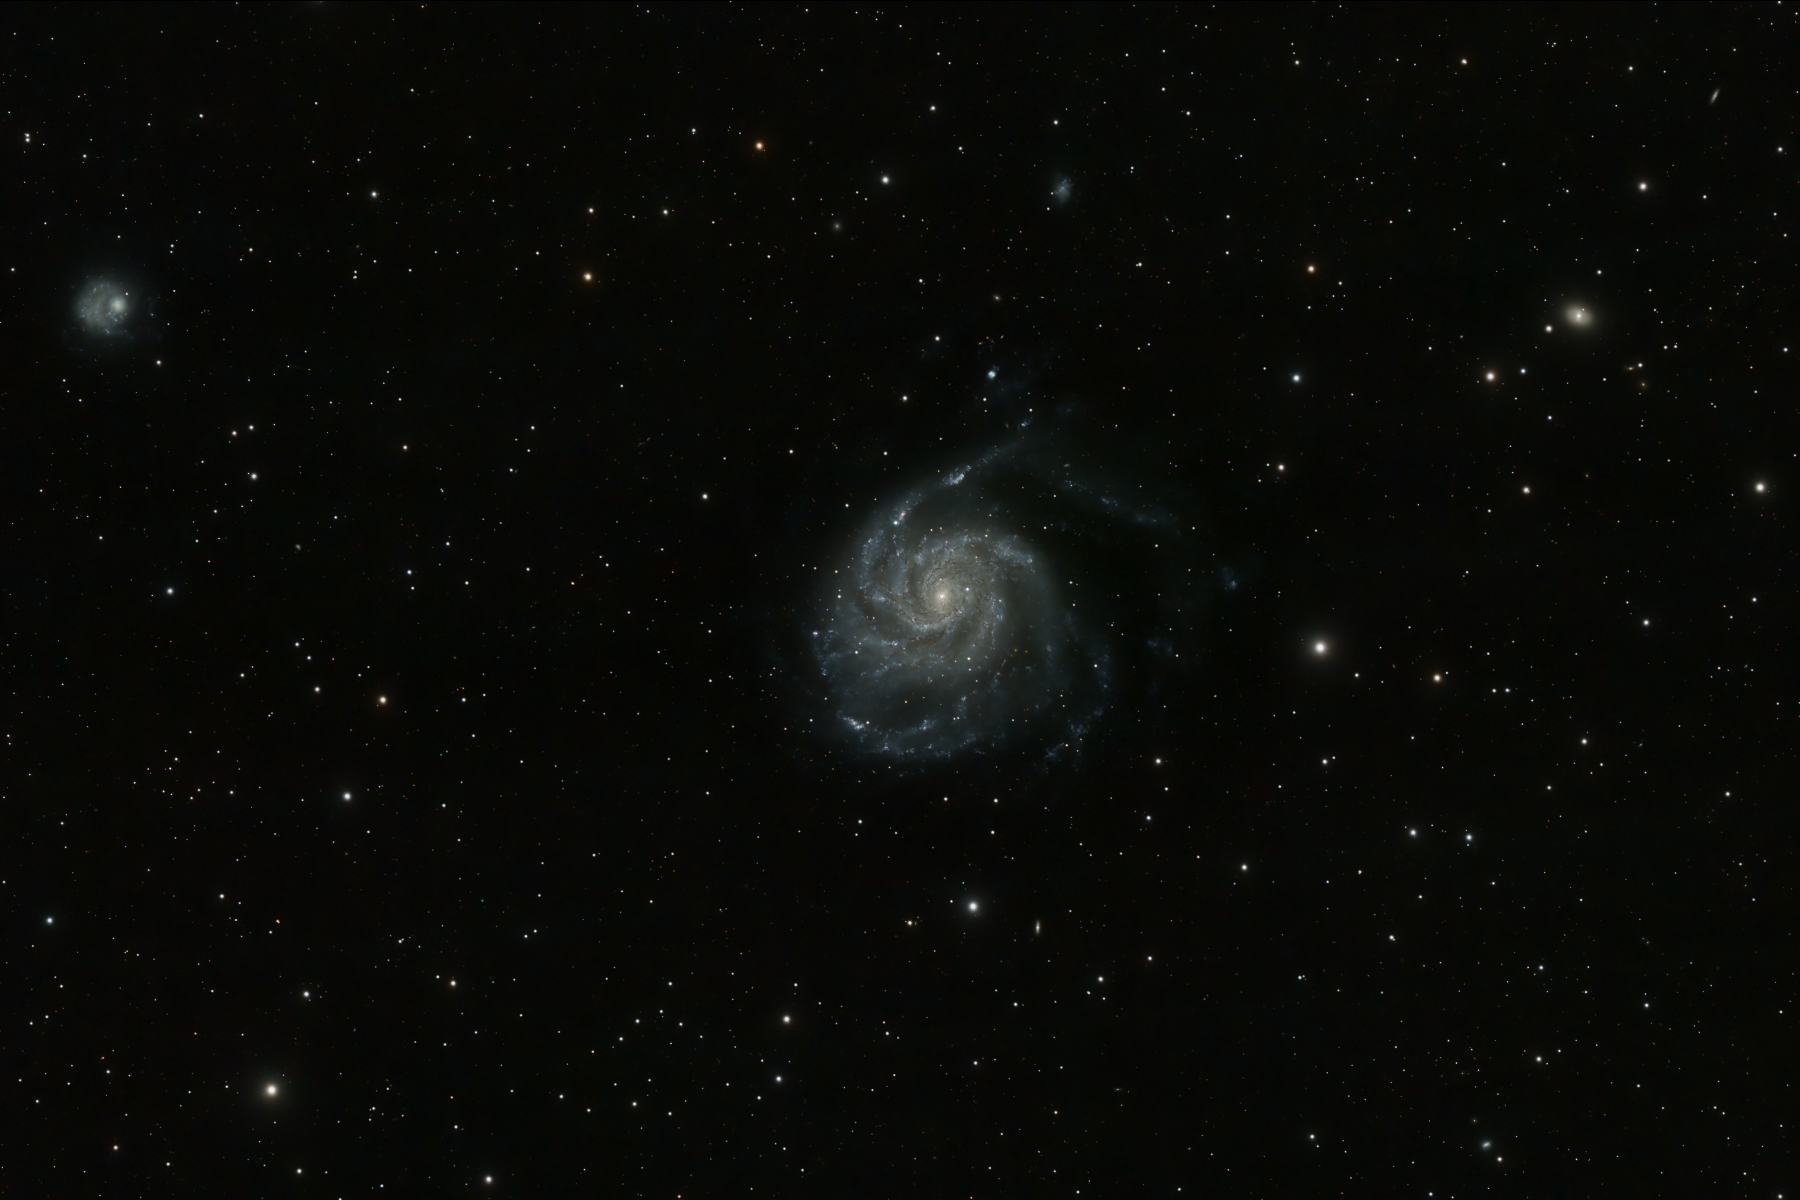 M101, The Ursa Major Pinwheel Galaxy